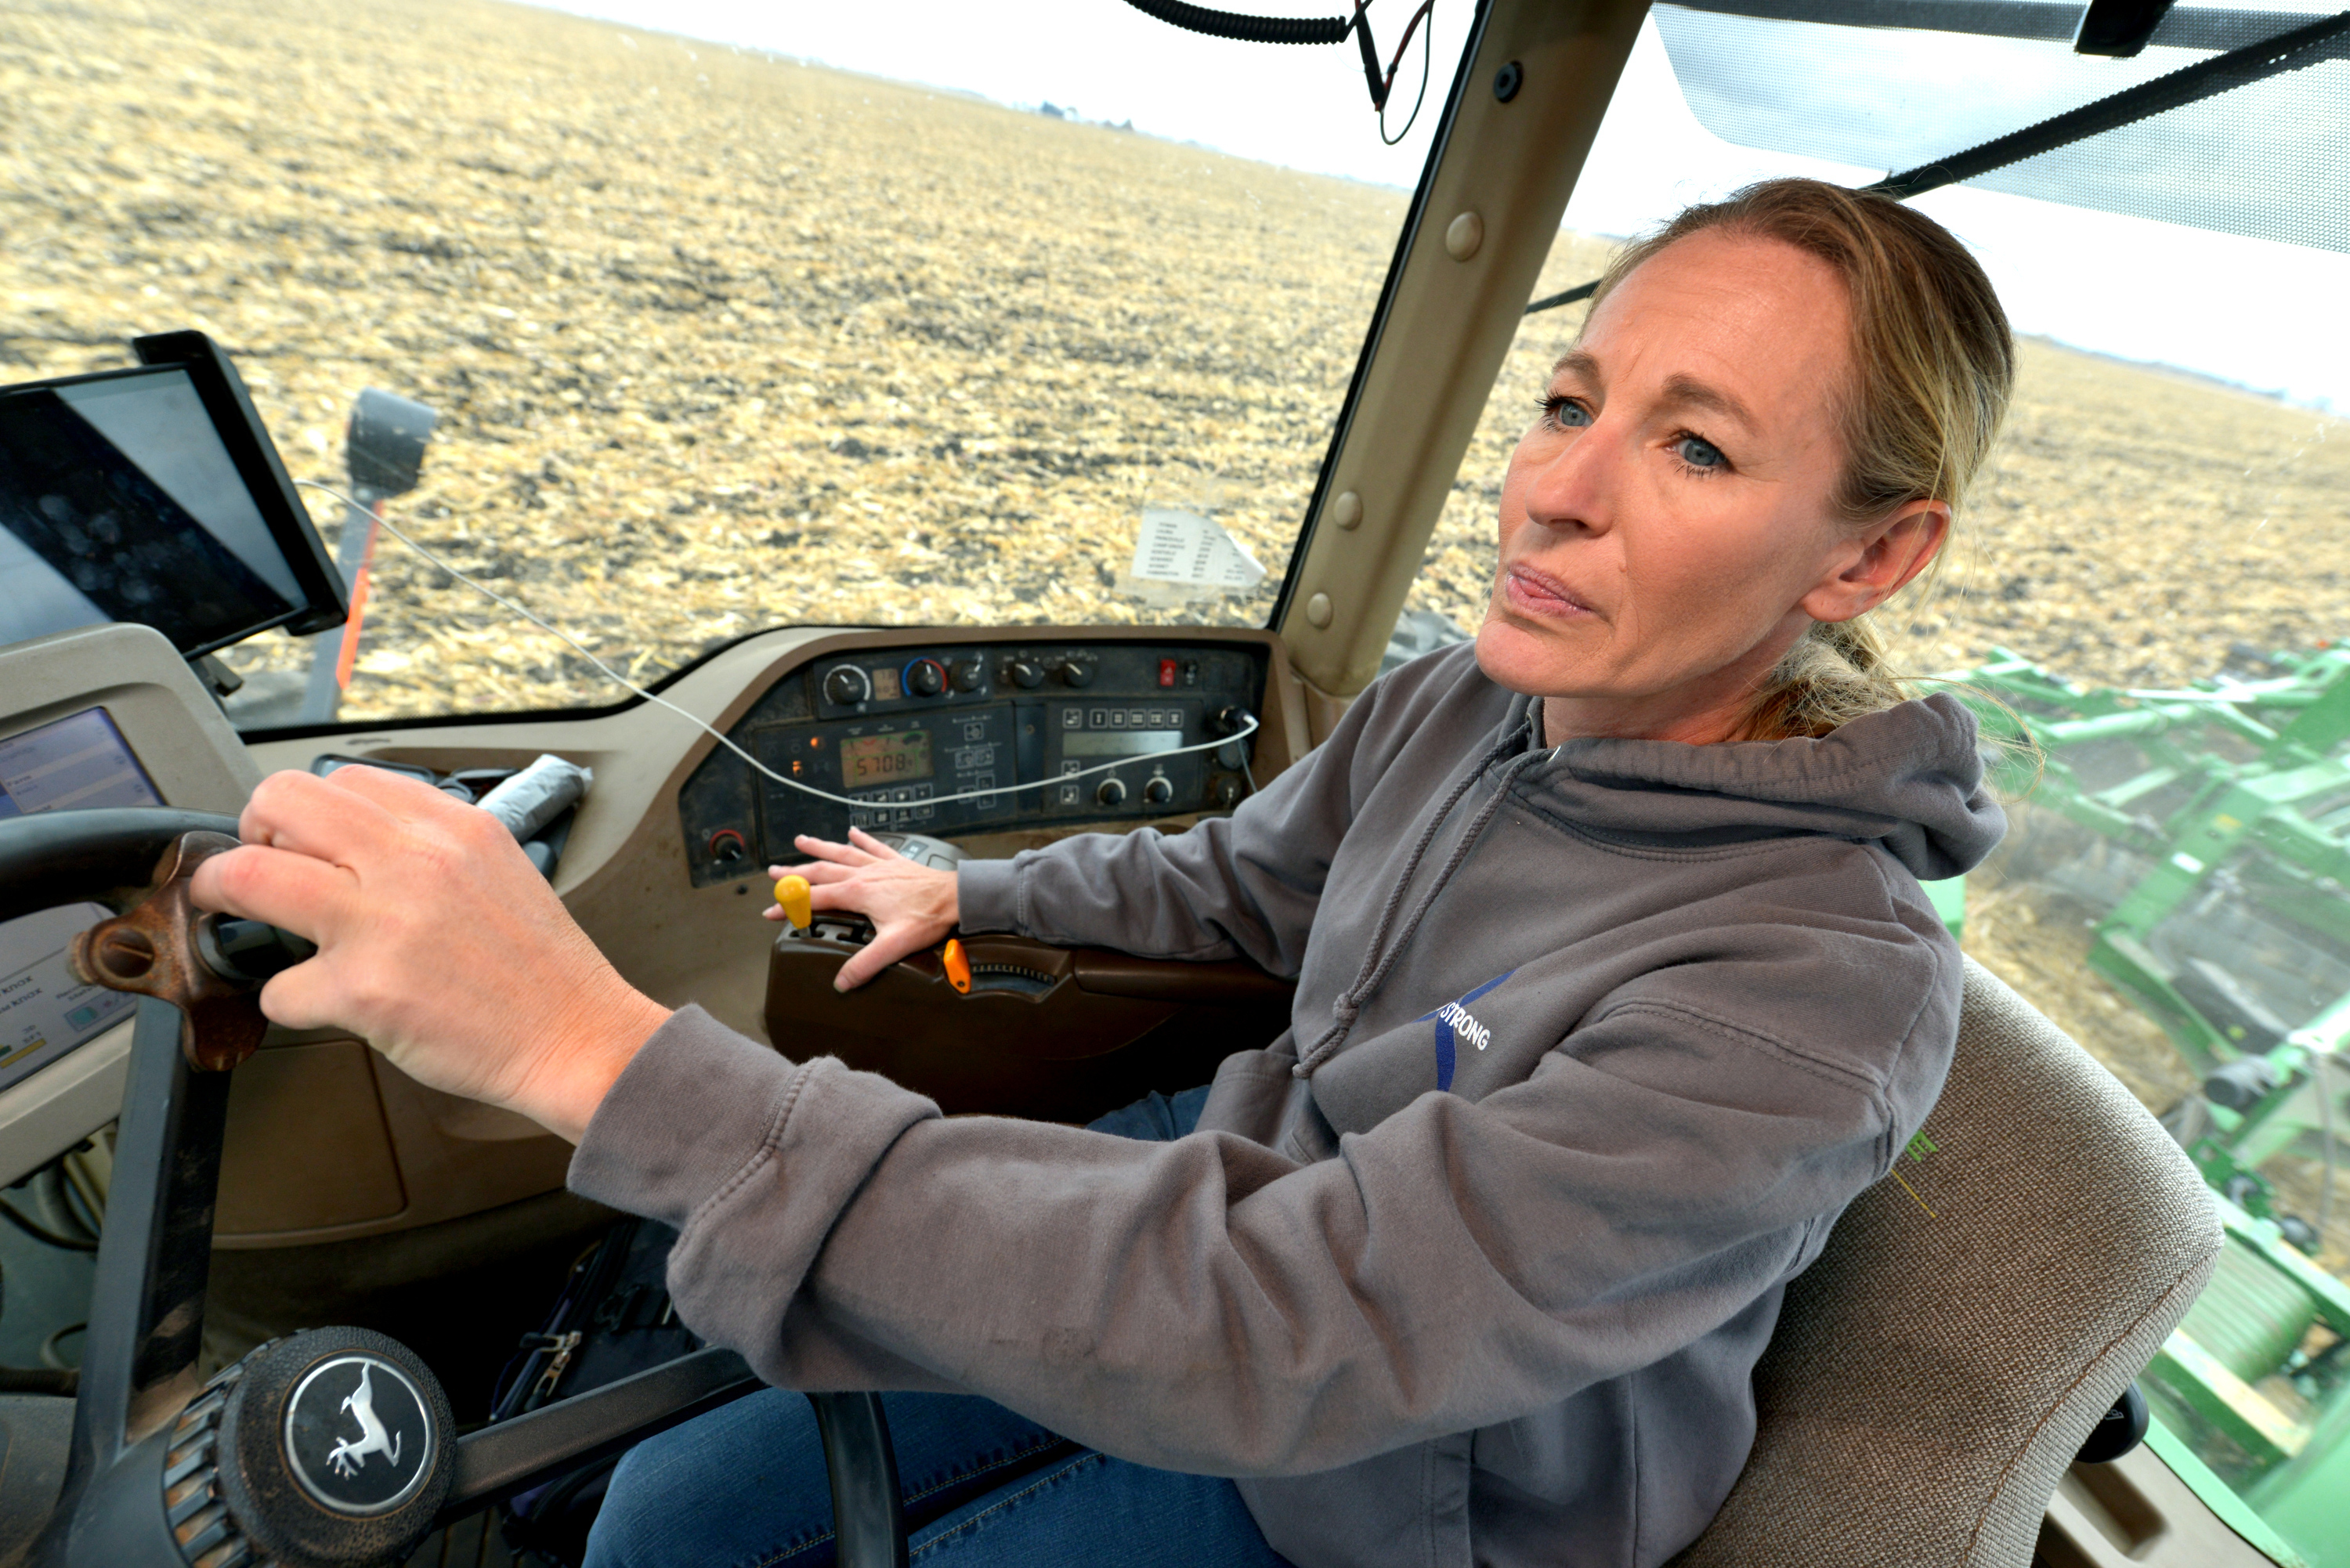 Cheryl Walsh of Bradford, discs a harvested corn field